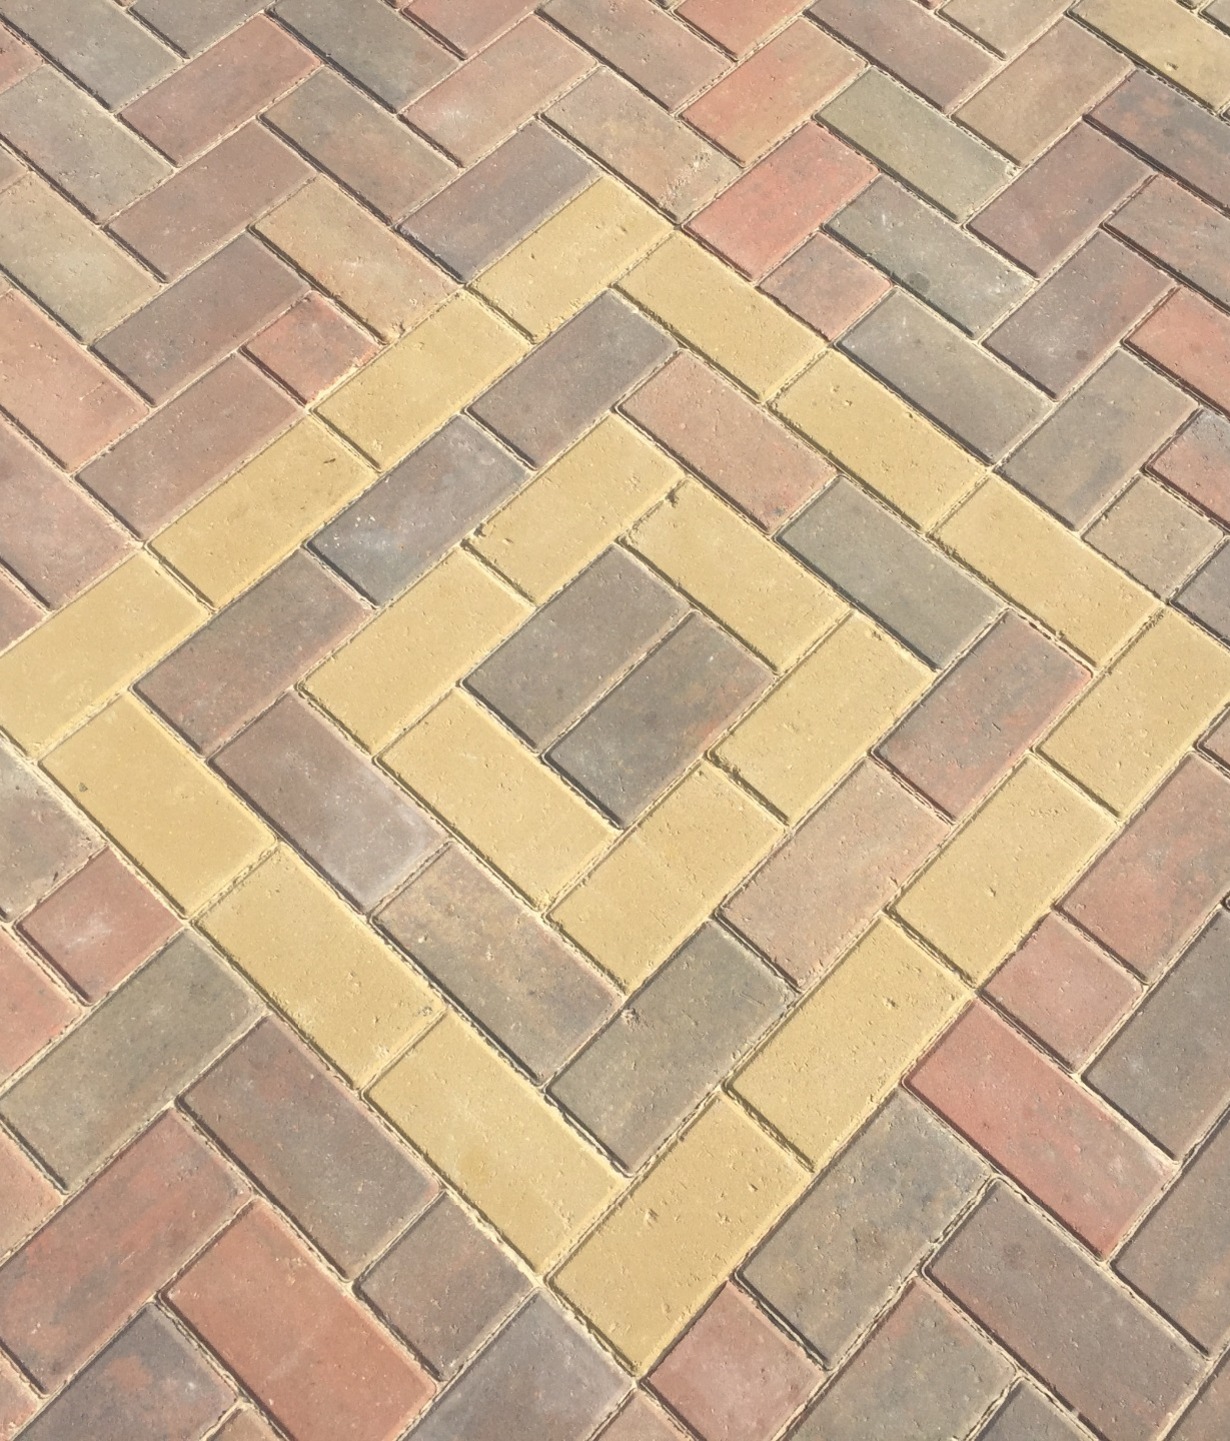 Decorative block paving